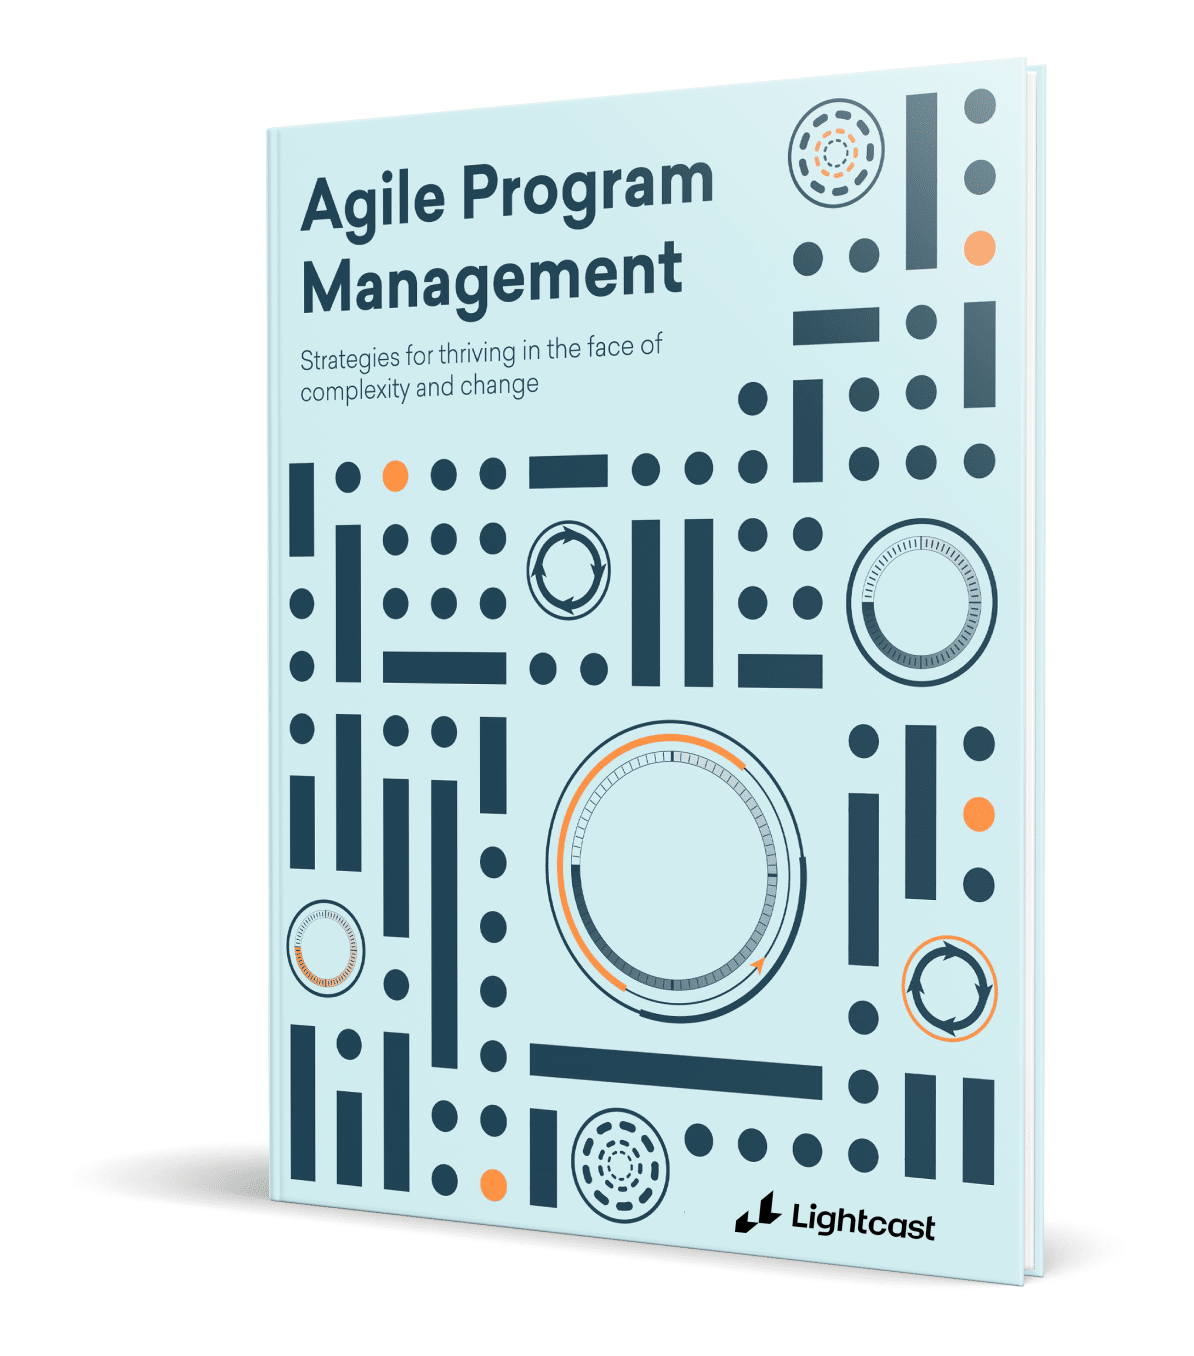 Agile Program Management report cover with Lightcast logo